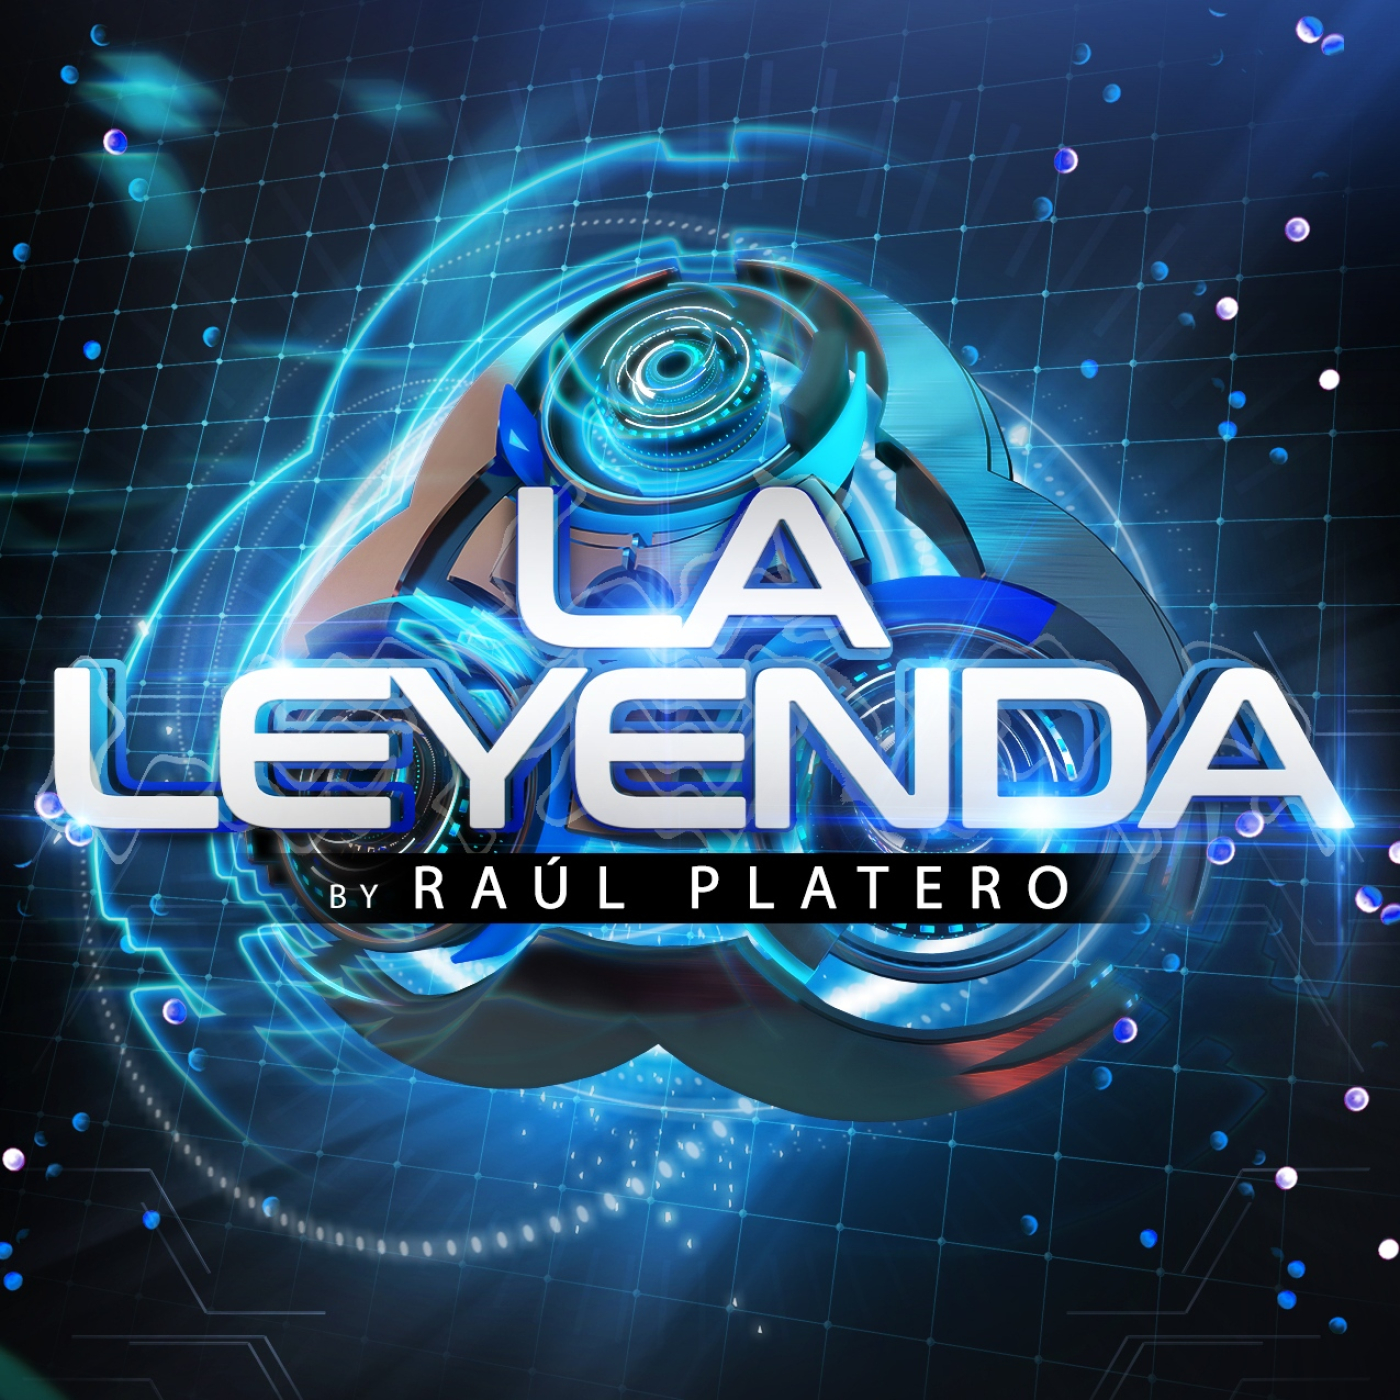 LA LEYENDA by RAUL PLATERO 2021 (Miércoles 22 Septiembre)